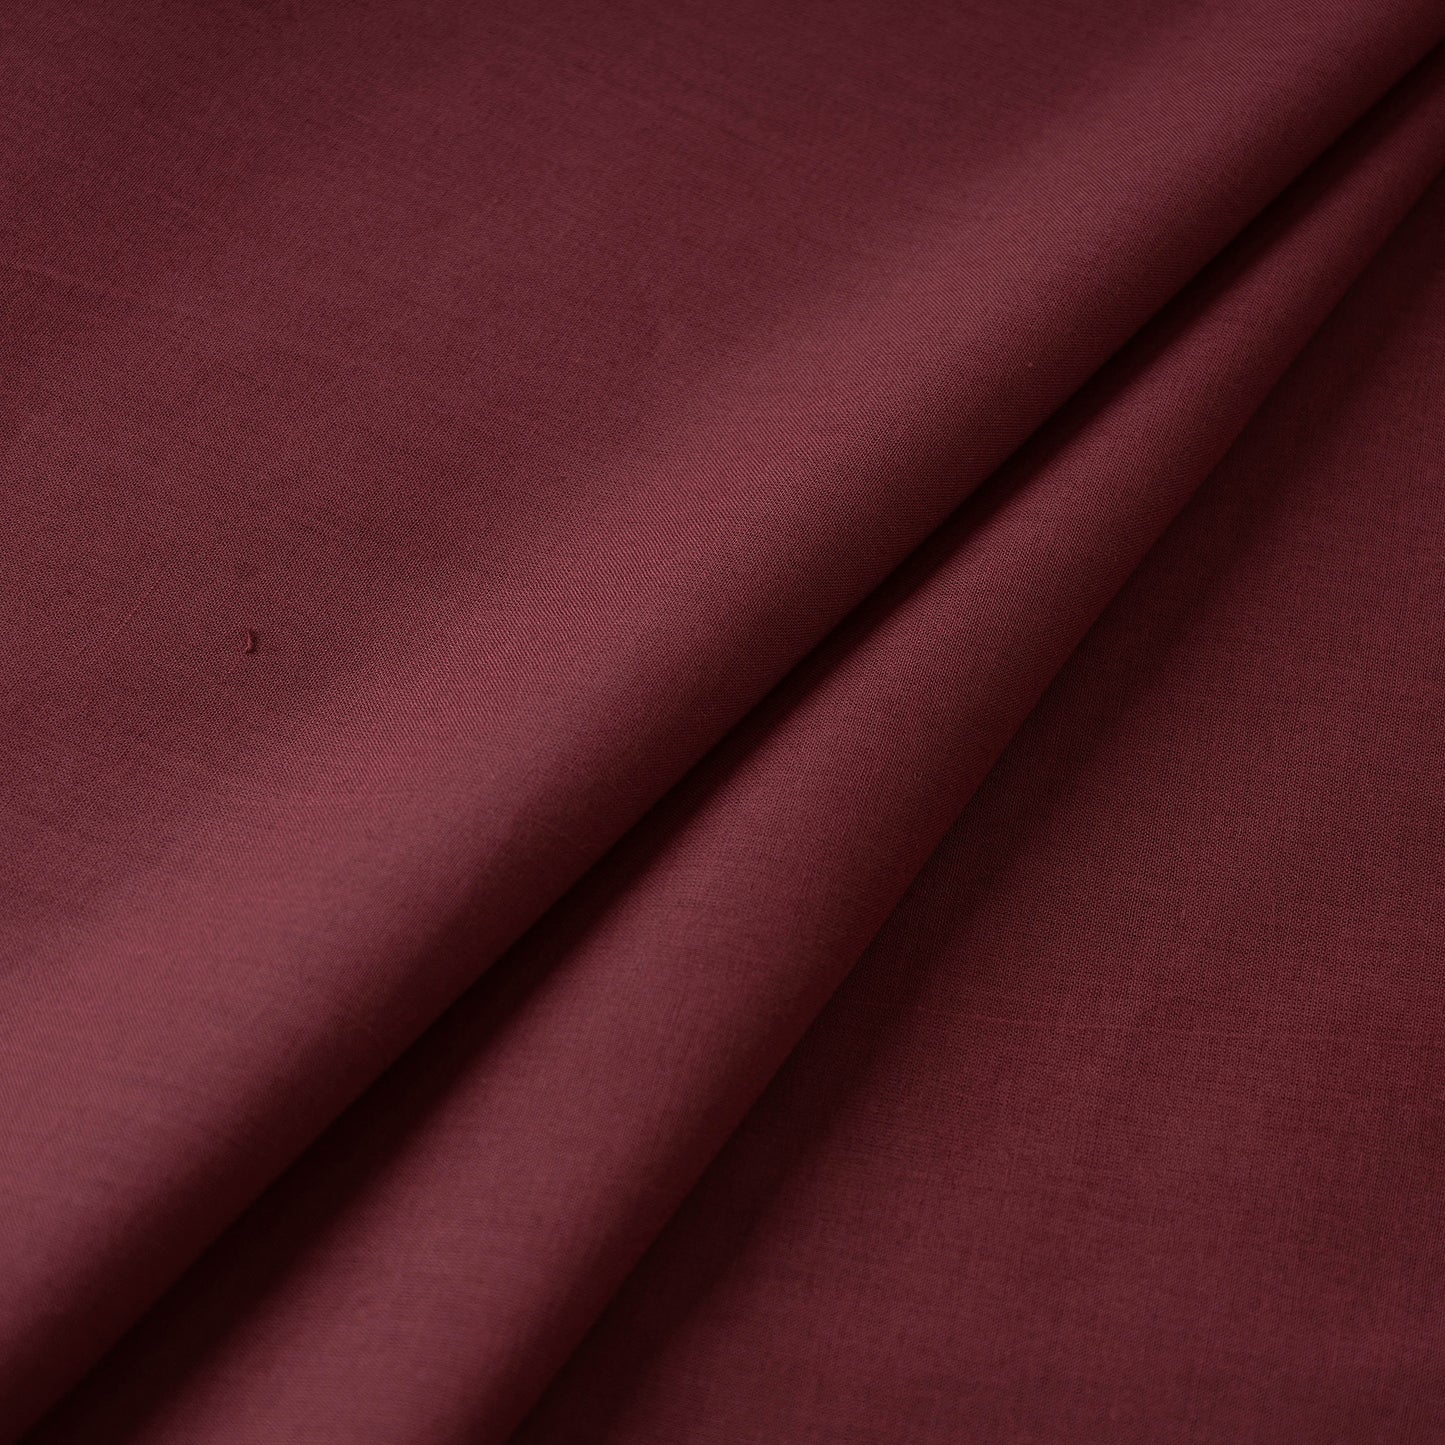 Maroon - Prewashed Plain Dyed Cotton Fabric